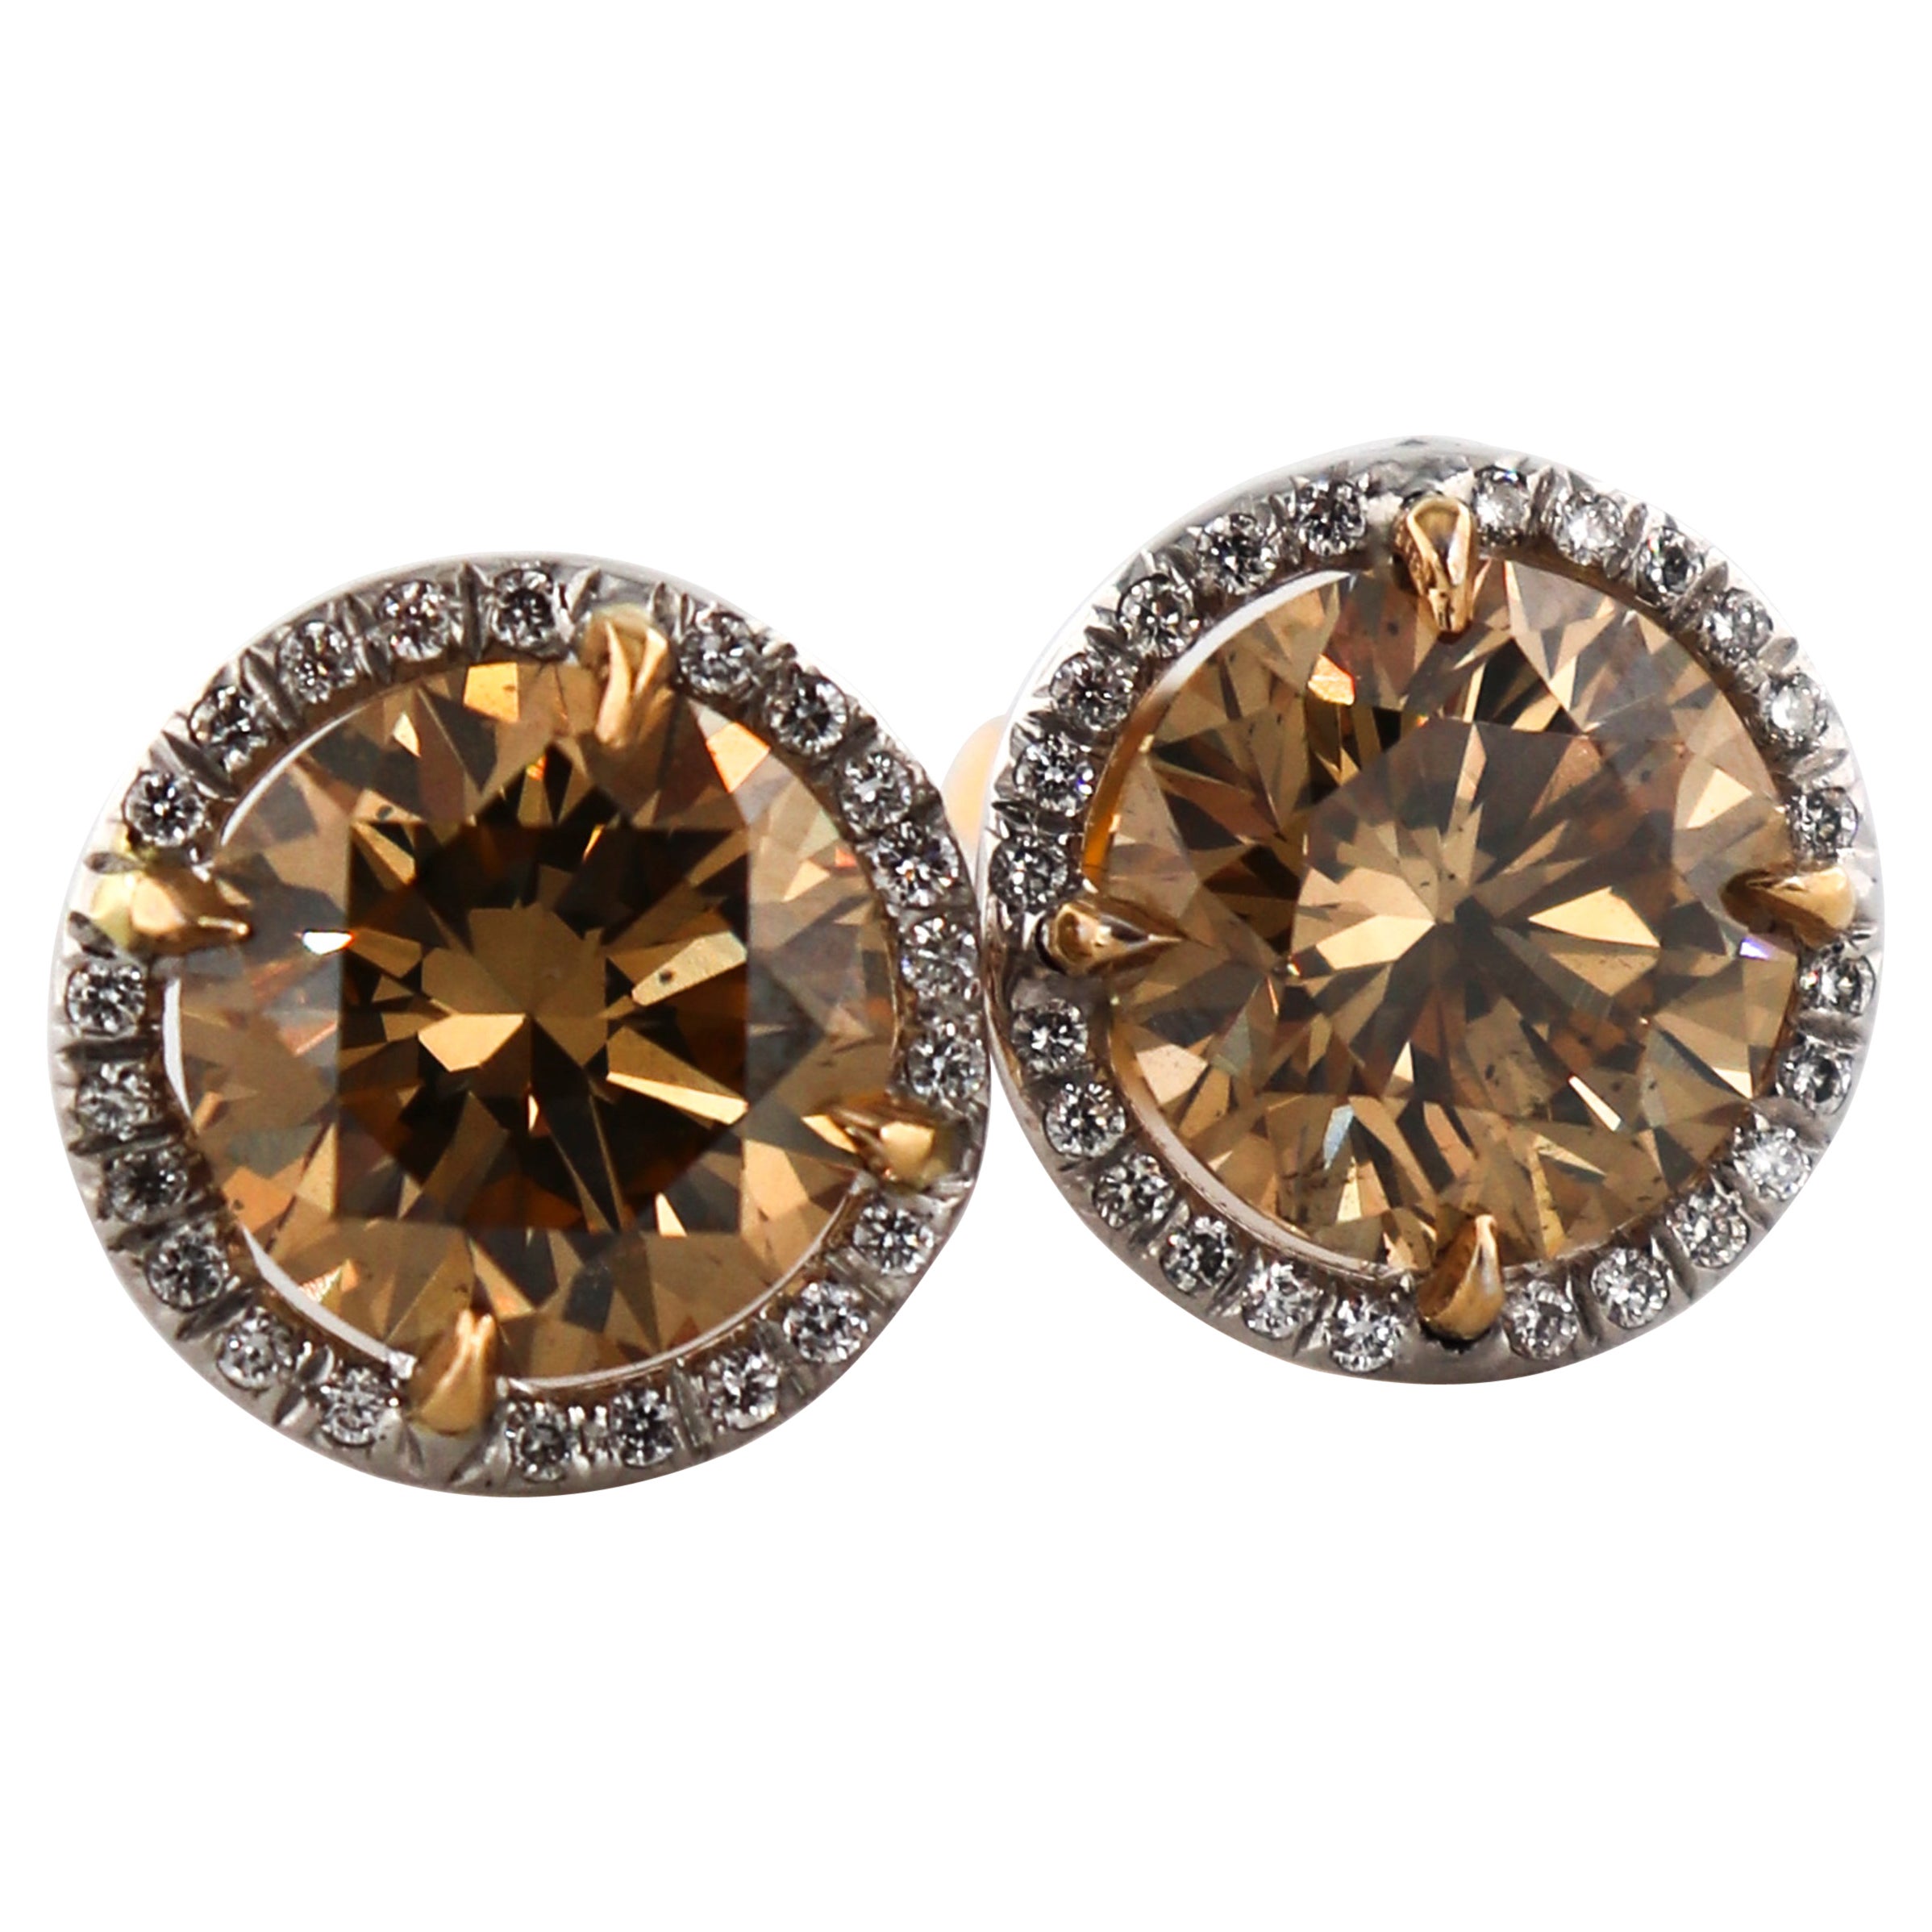 J. Birnbach 4.86 carat Cognac Round Brilliant Diamond earrings